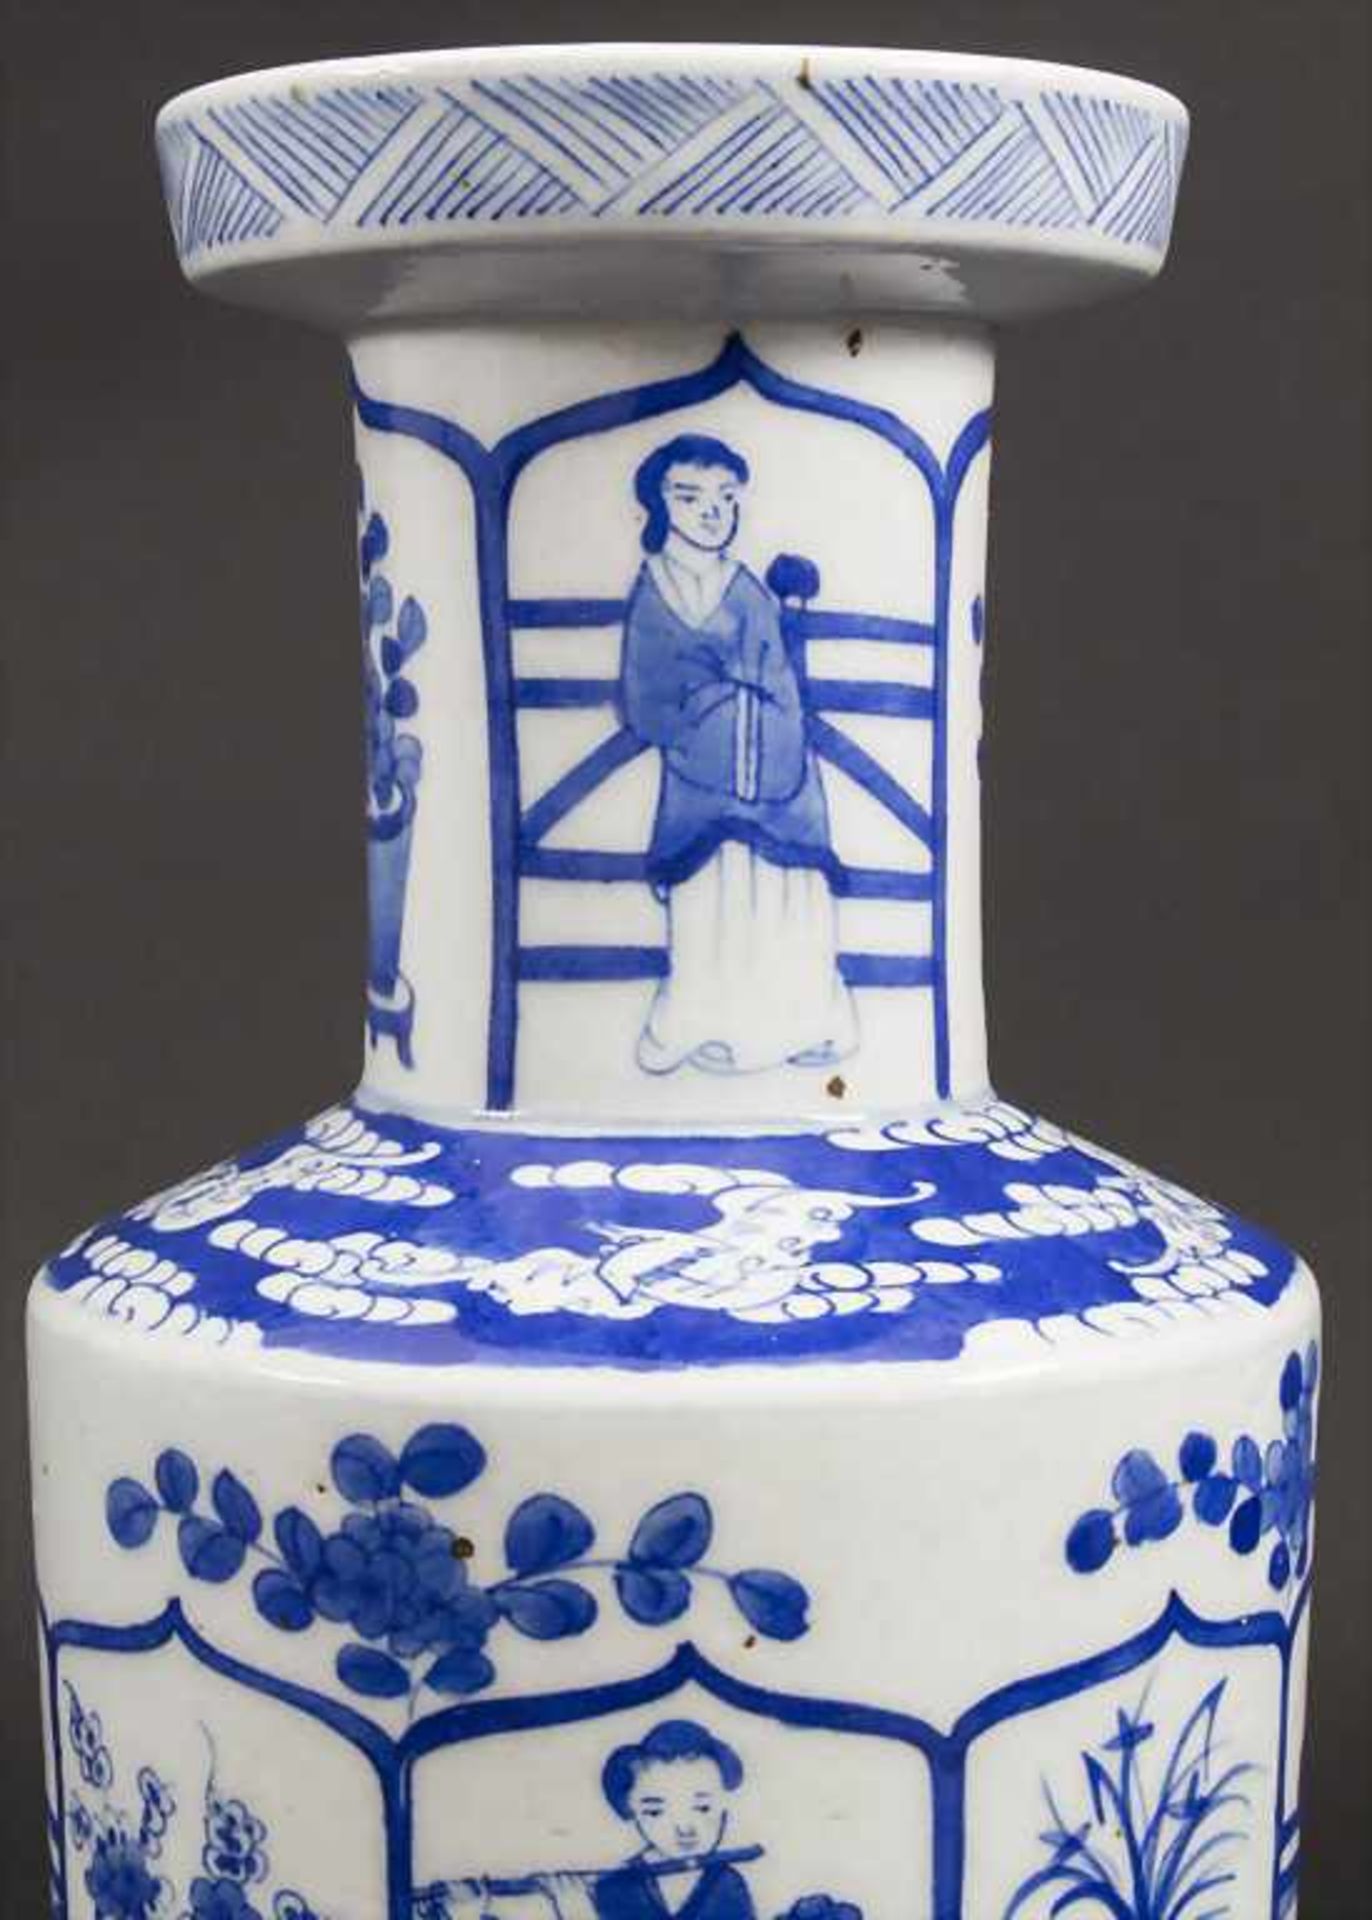 Ziervase / A decorative vase, China, Qing-Dynastie (1644-1911), wohl Kangxi-Periode (1662-1722) - Bild 5 aus 5